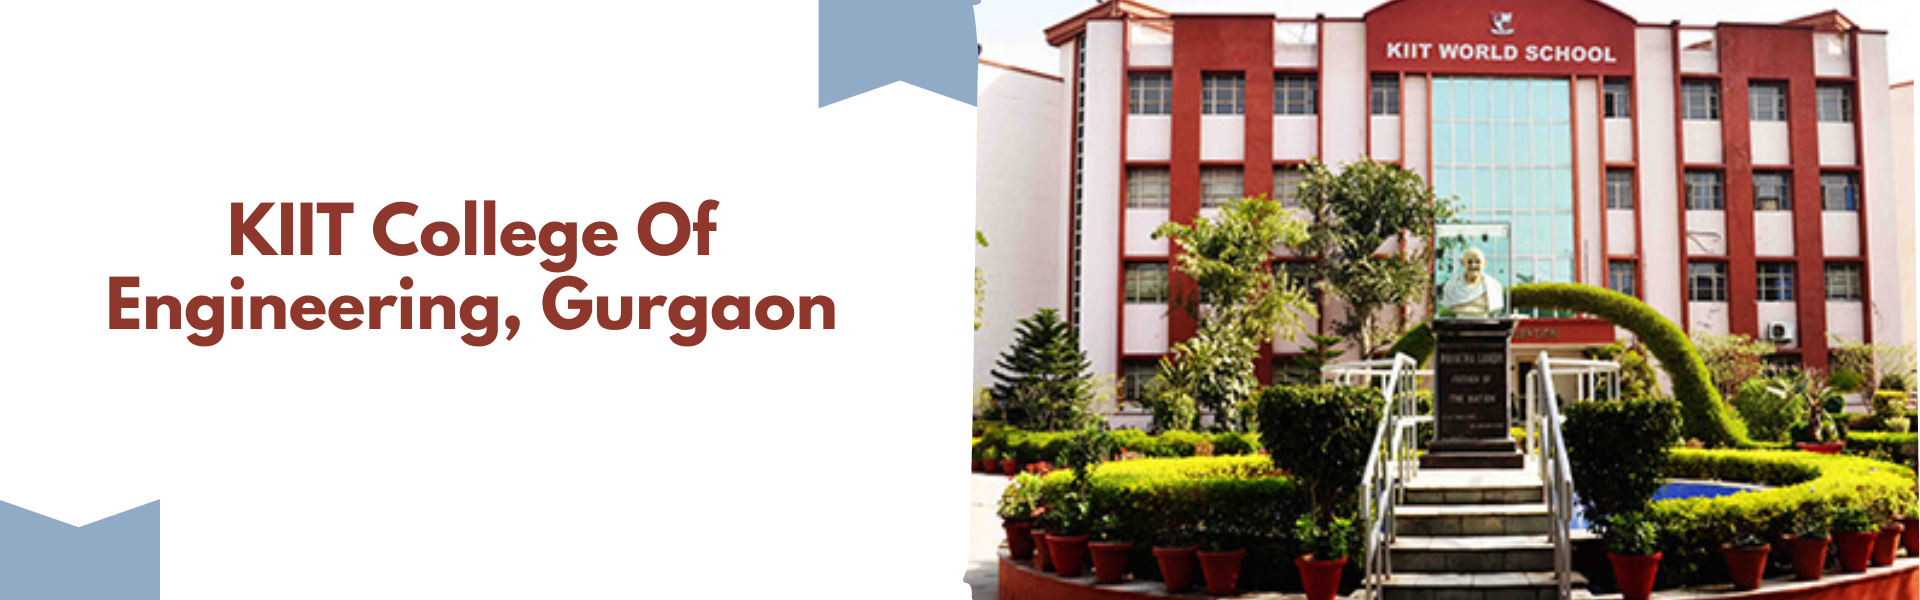 KIIT College Of Engineering, Gurgaon